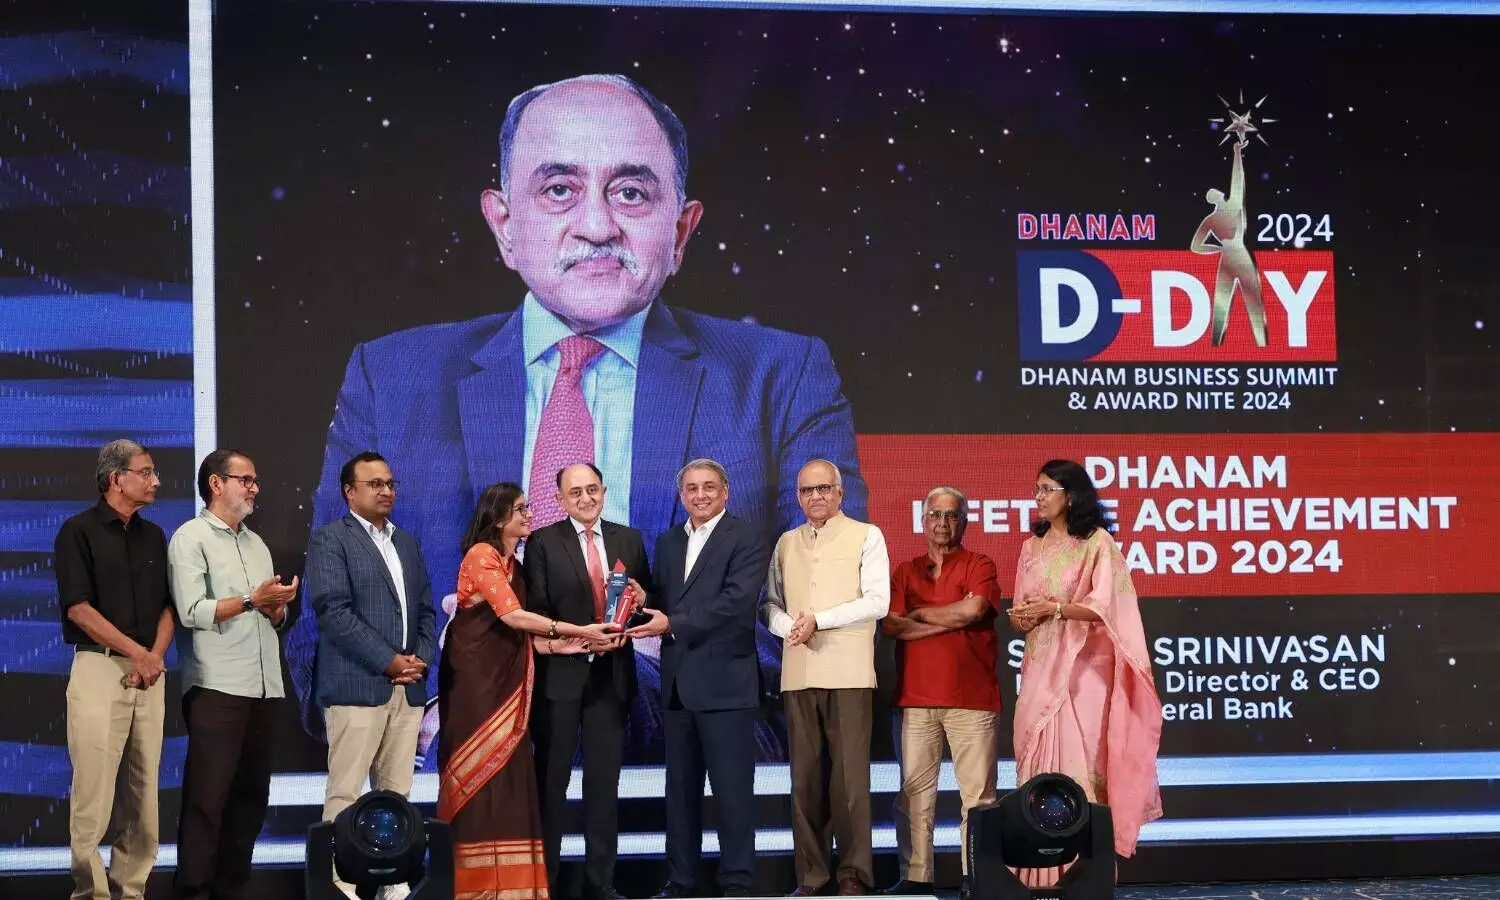 Dhanam Businessman of the year award 2024